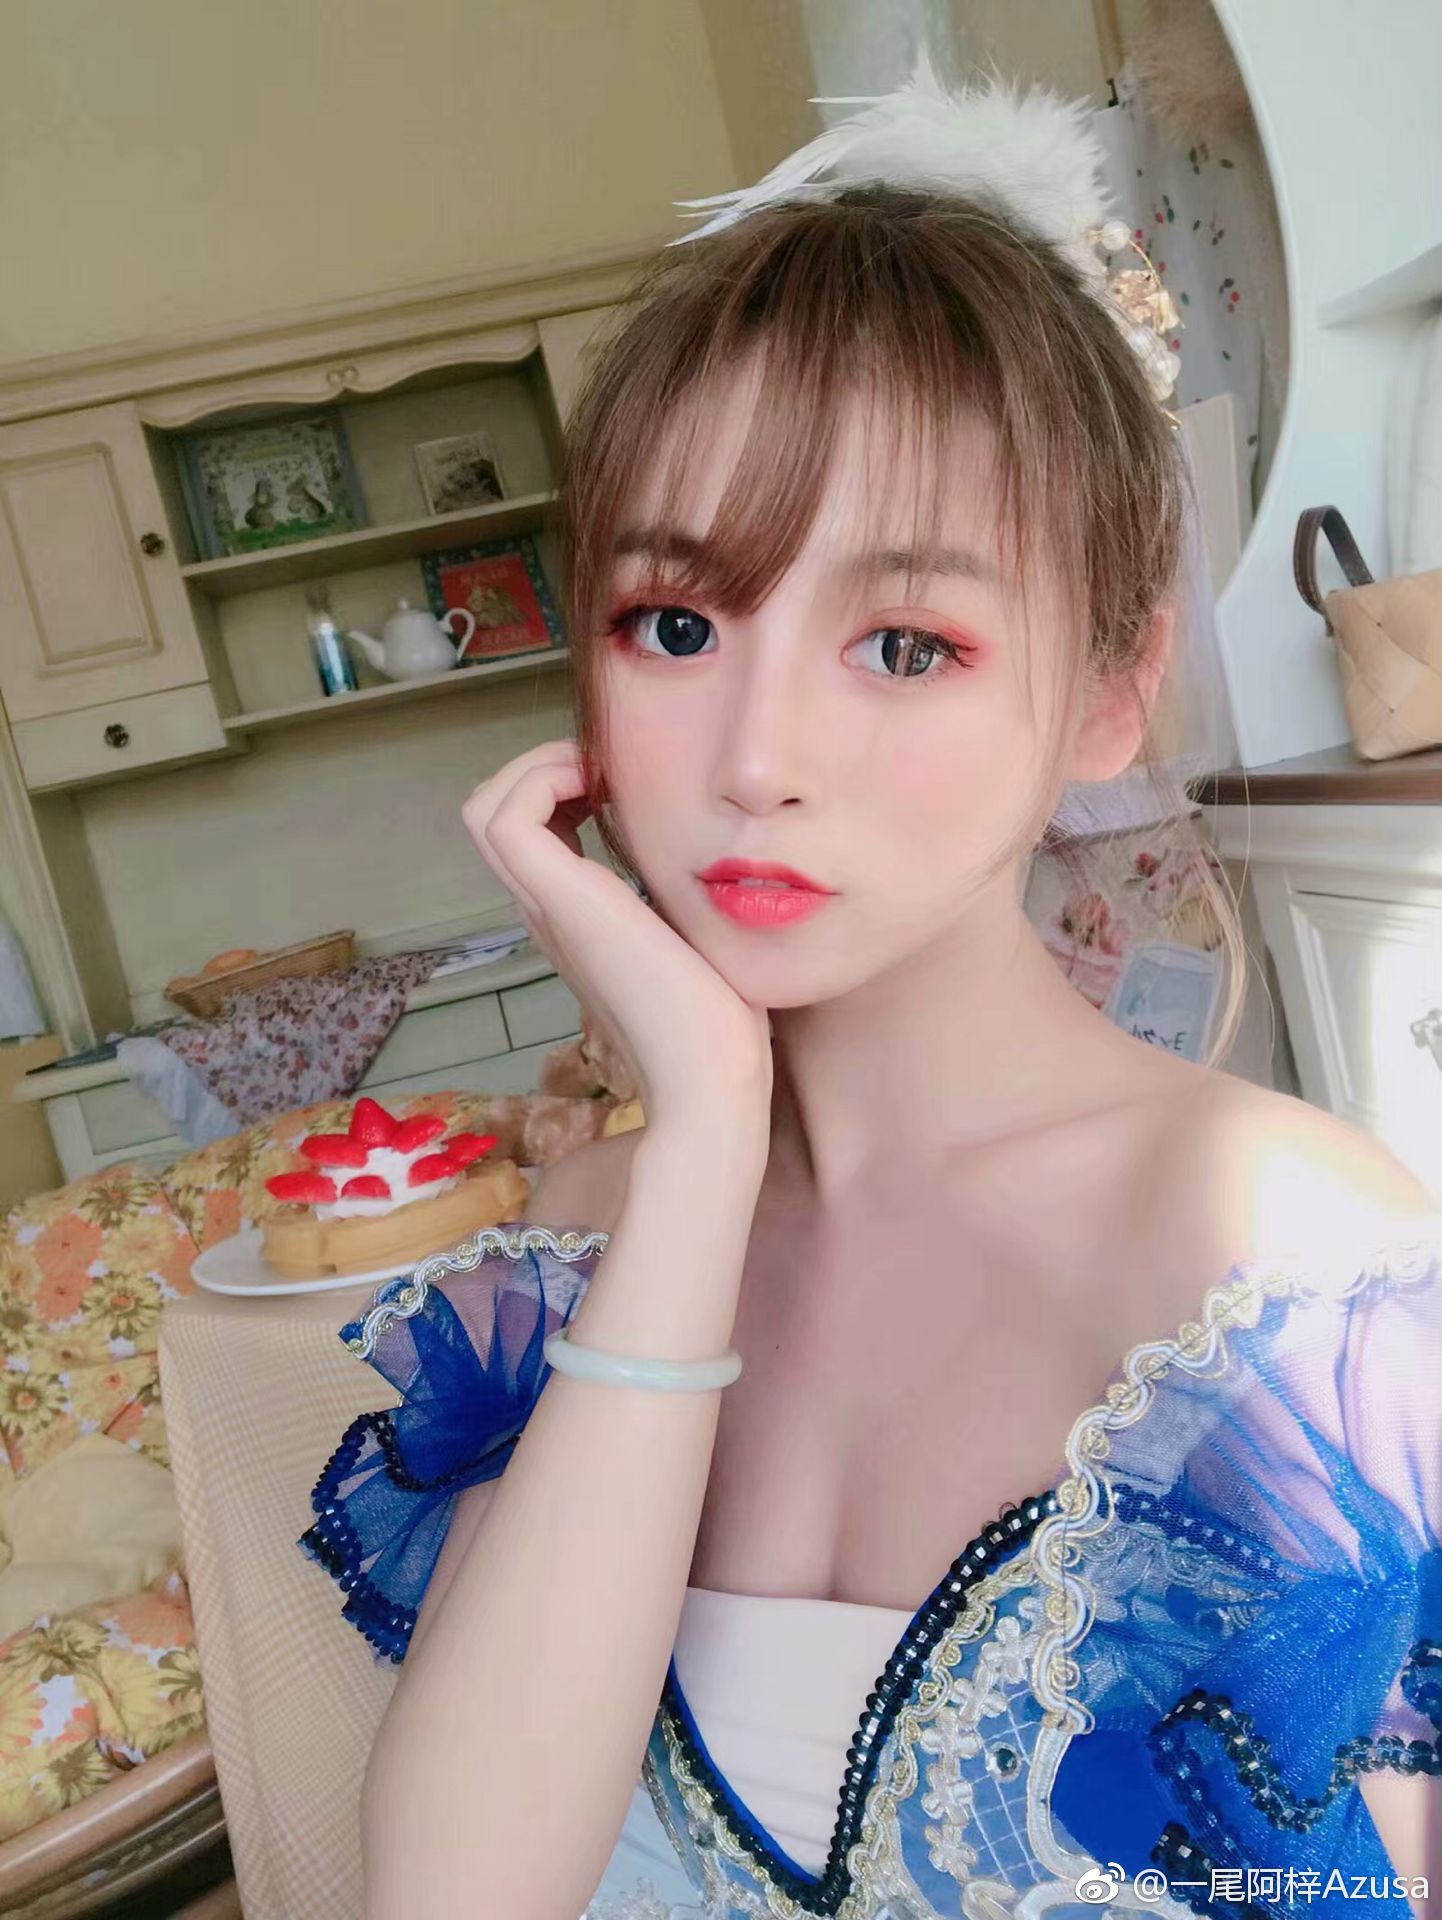 Azusa Weibo may 1513, 2019